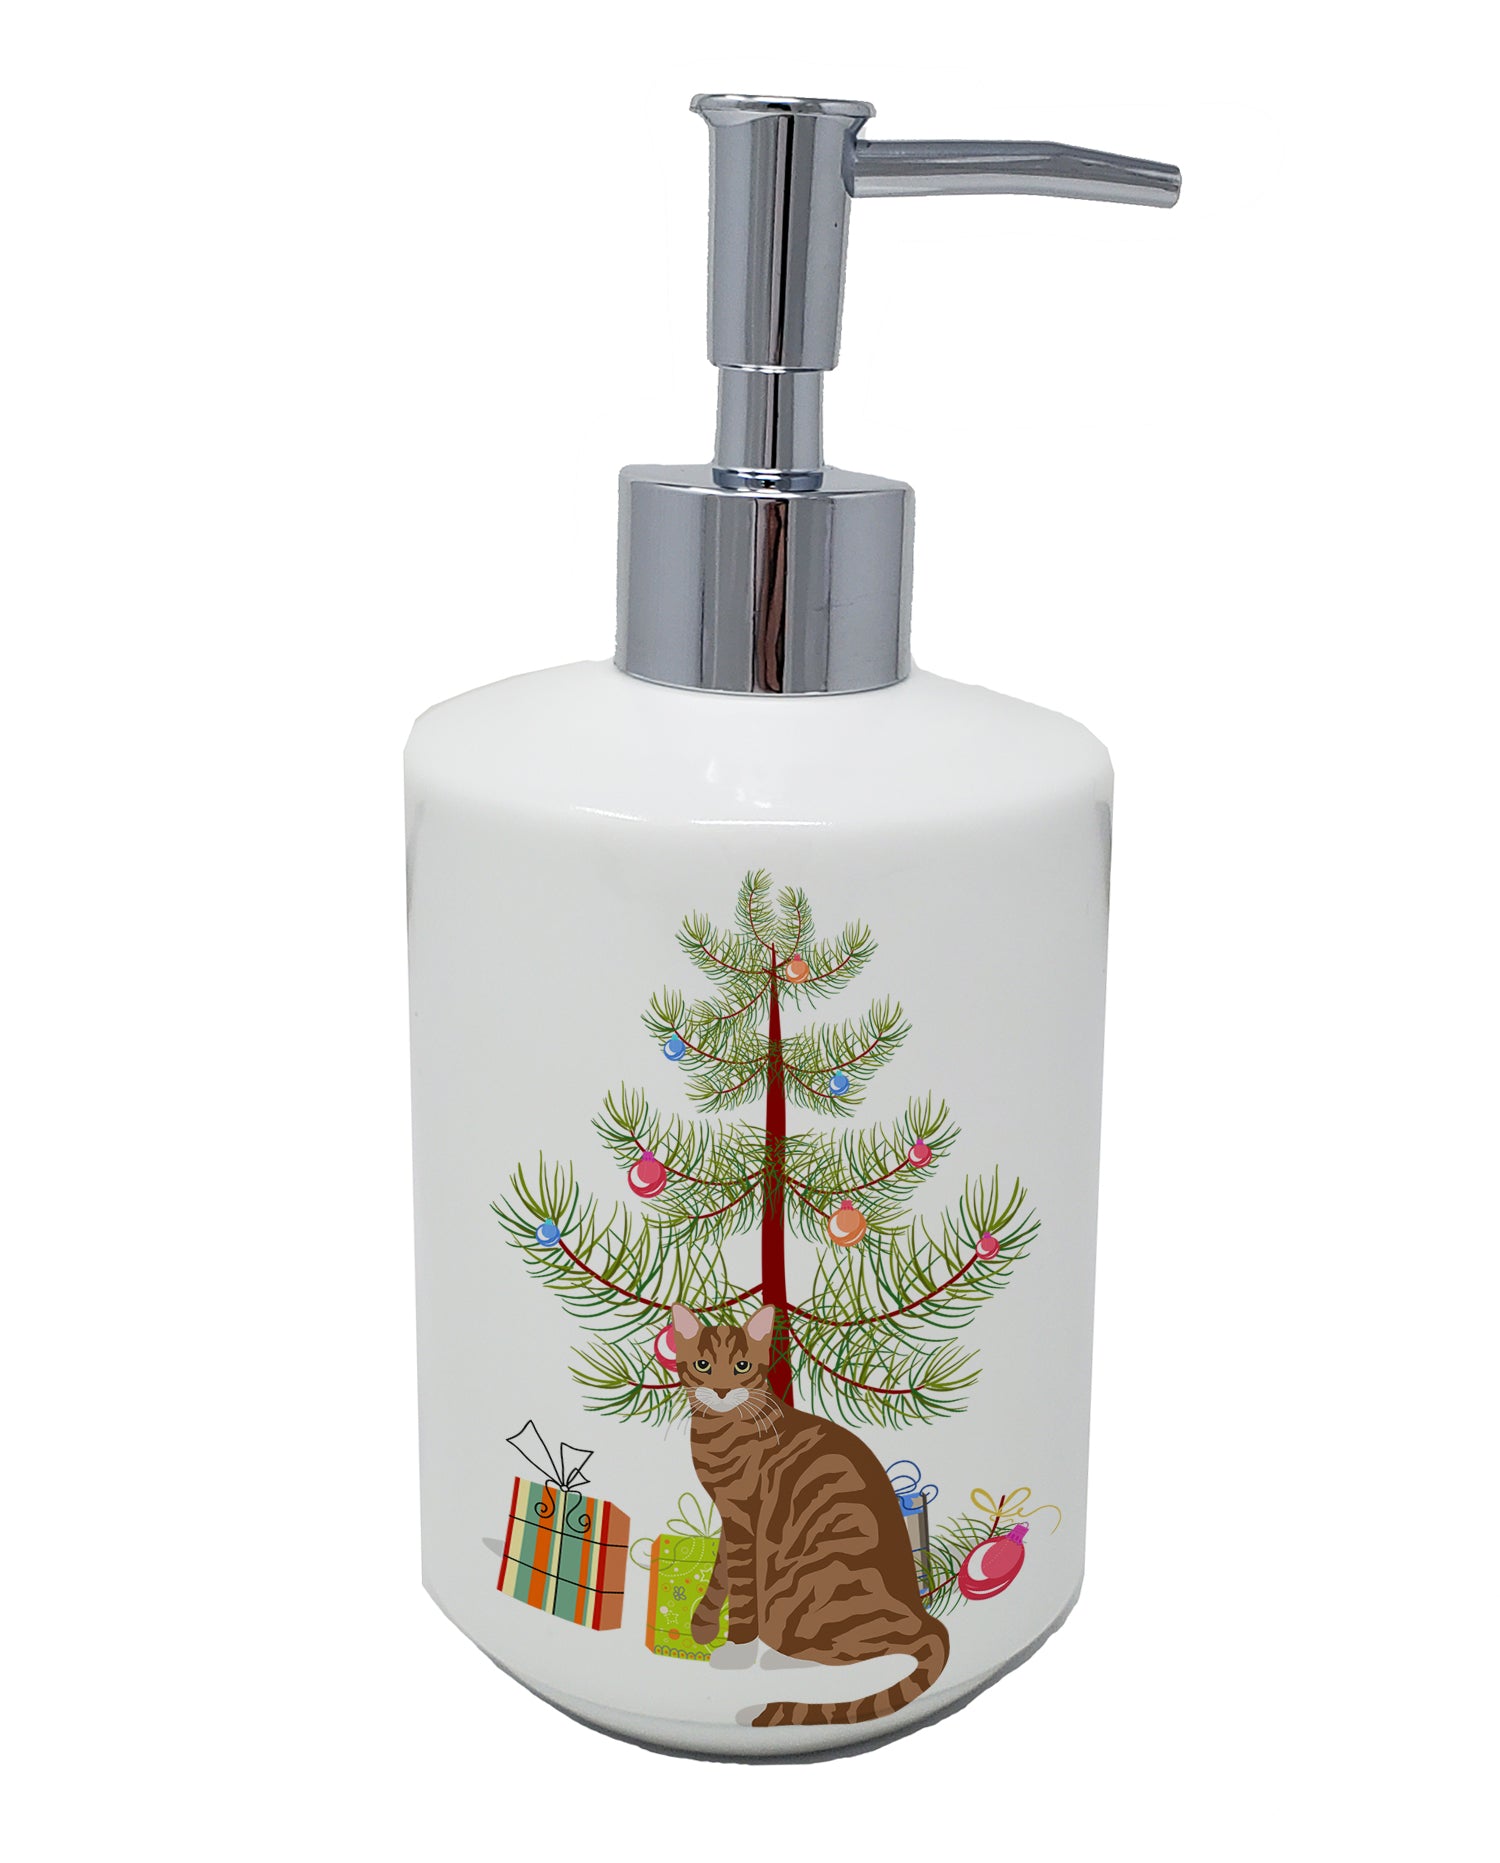 Buy this Toyger Cat Merry Christmas Ceramic Soap Dispenser